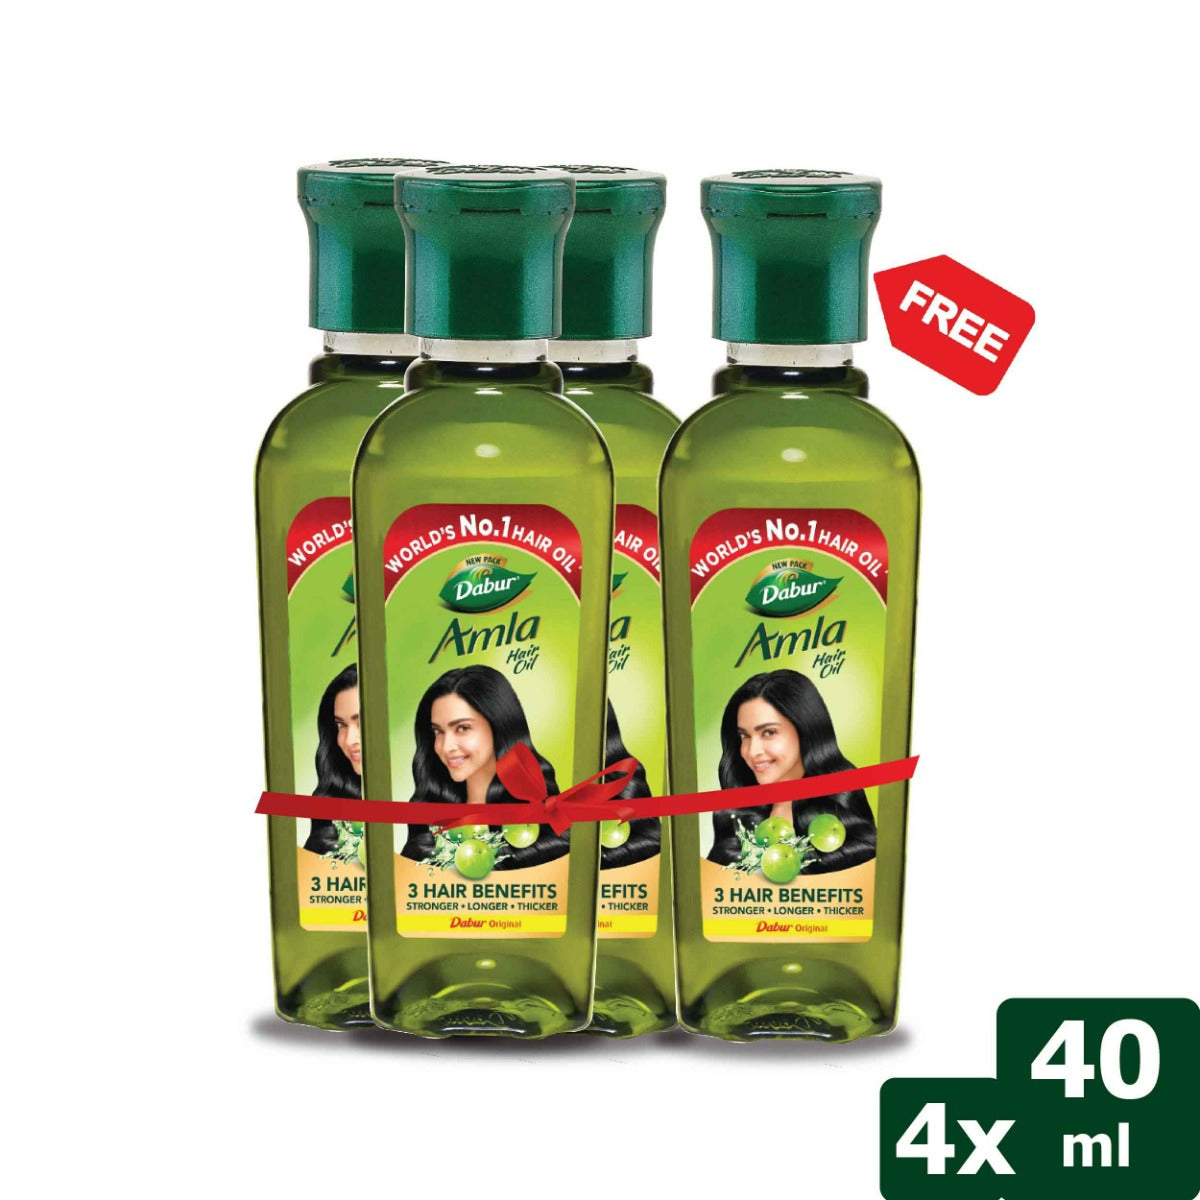 Dabur Amla Hair Oil - 40ml (Buy 3 Get 1 Free)